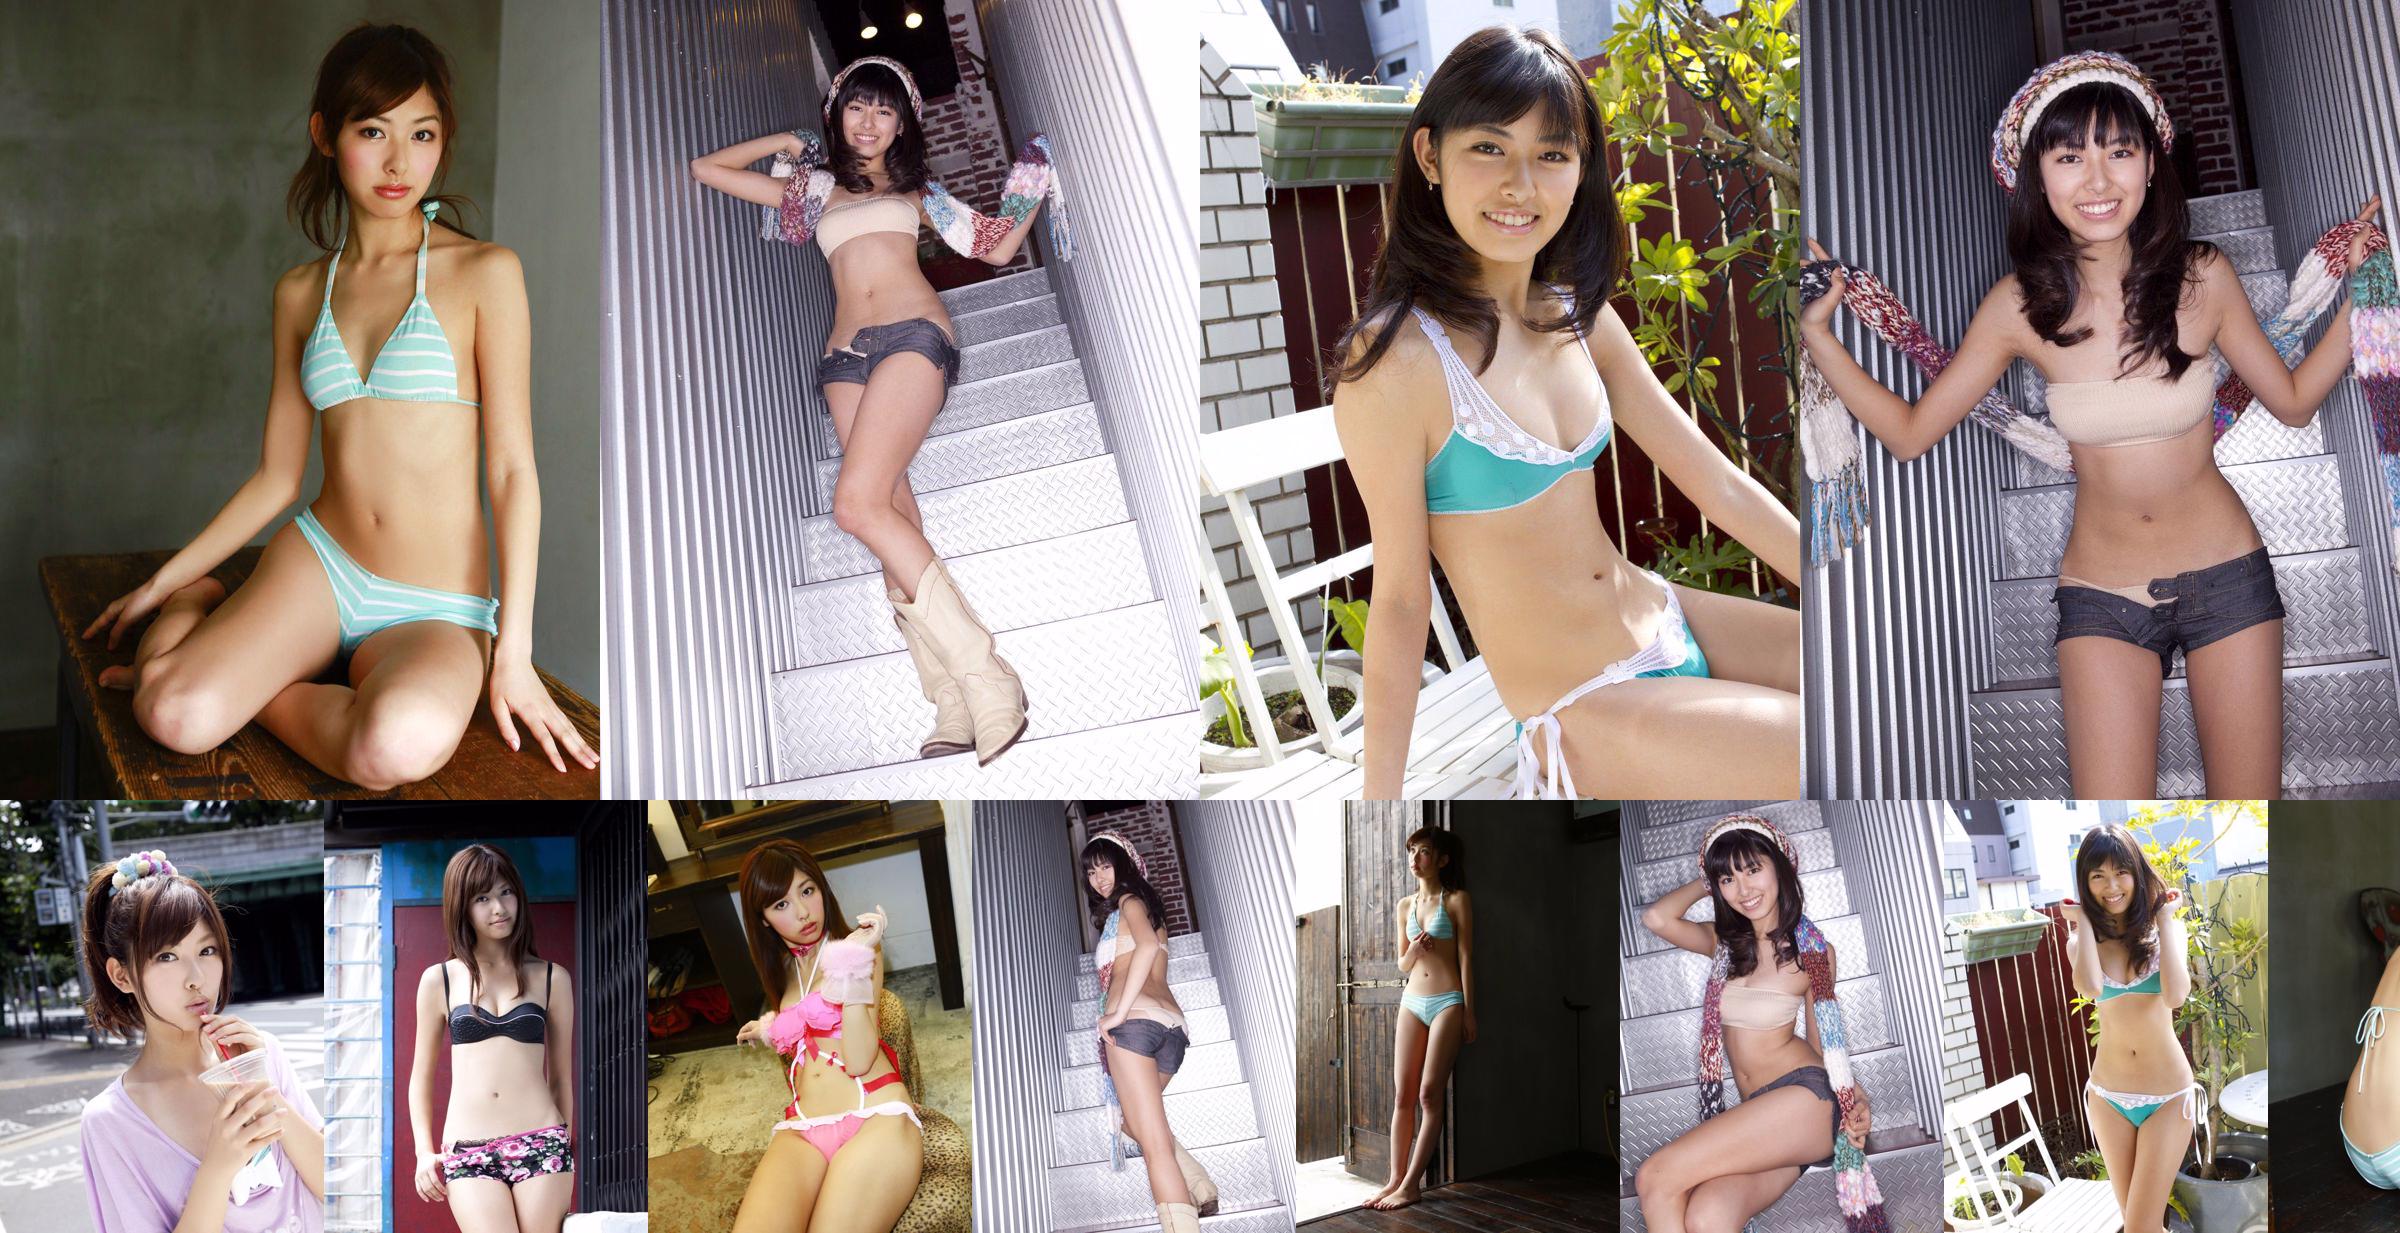 Yurika Tachibana / Yurika Tachibana "Be a Babe" [Sabra.net] Strictly Girls No.8b544c Pagina 1